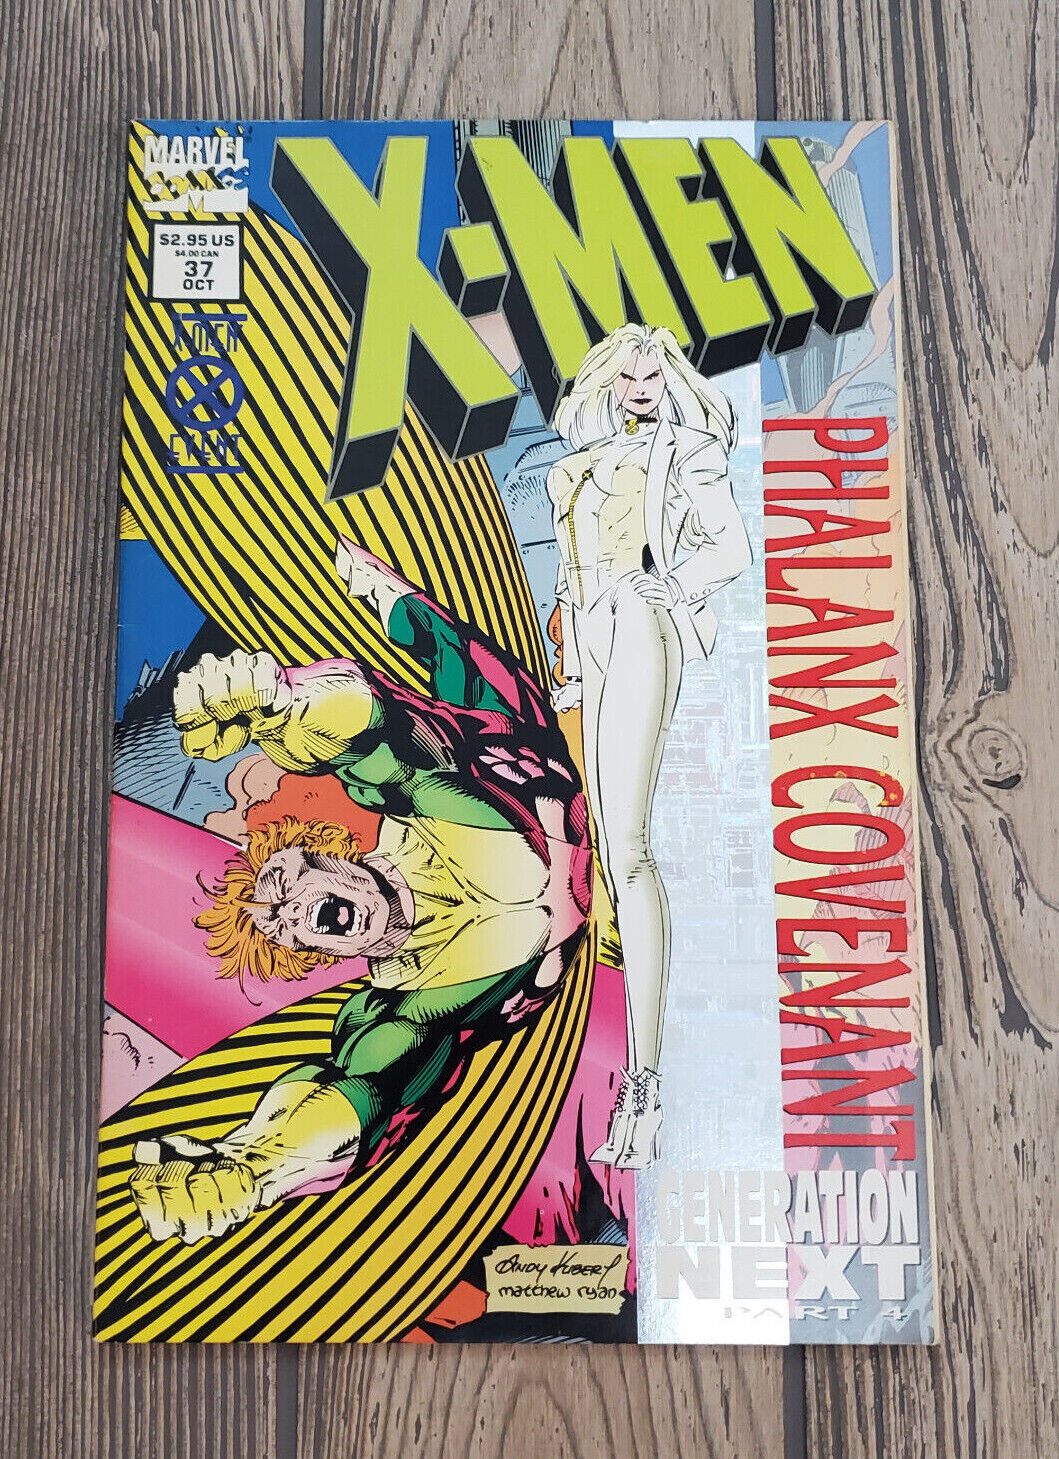 X-Men Phalanx Covenant Generation Next Part 4 Issue #37 Marvel Holofoil Cover